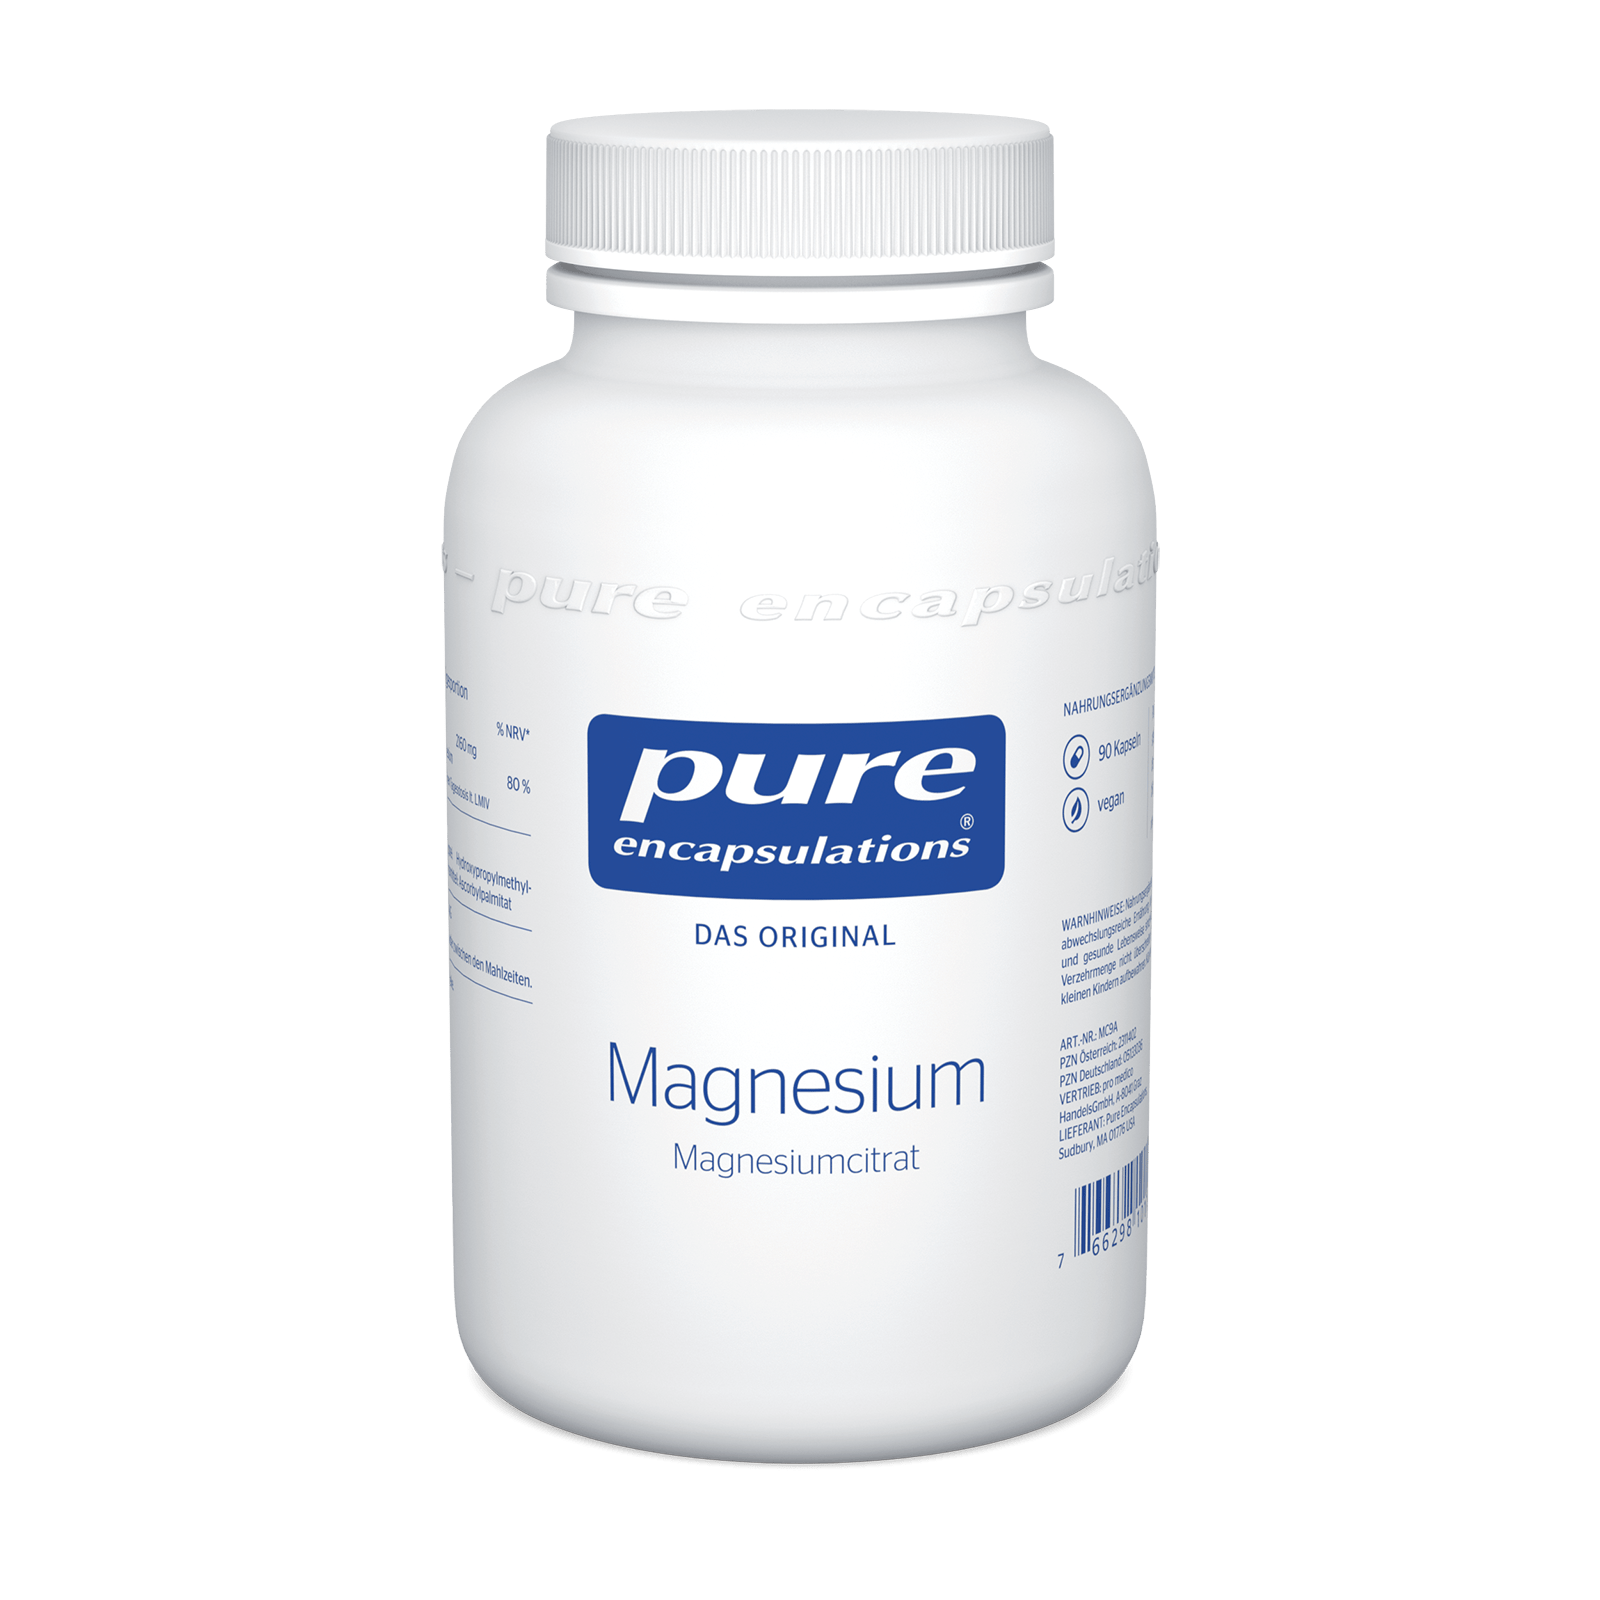 Pure Encapsulations MAGNESIUM CITRAT ( Magnesiumcitrat ) Kapseln 90Stück